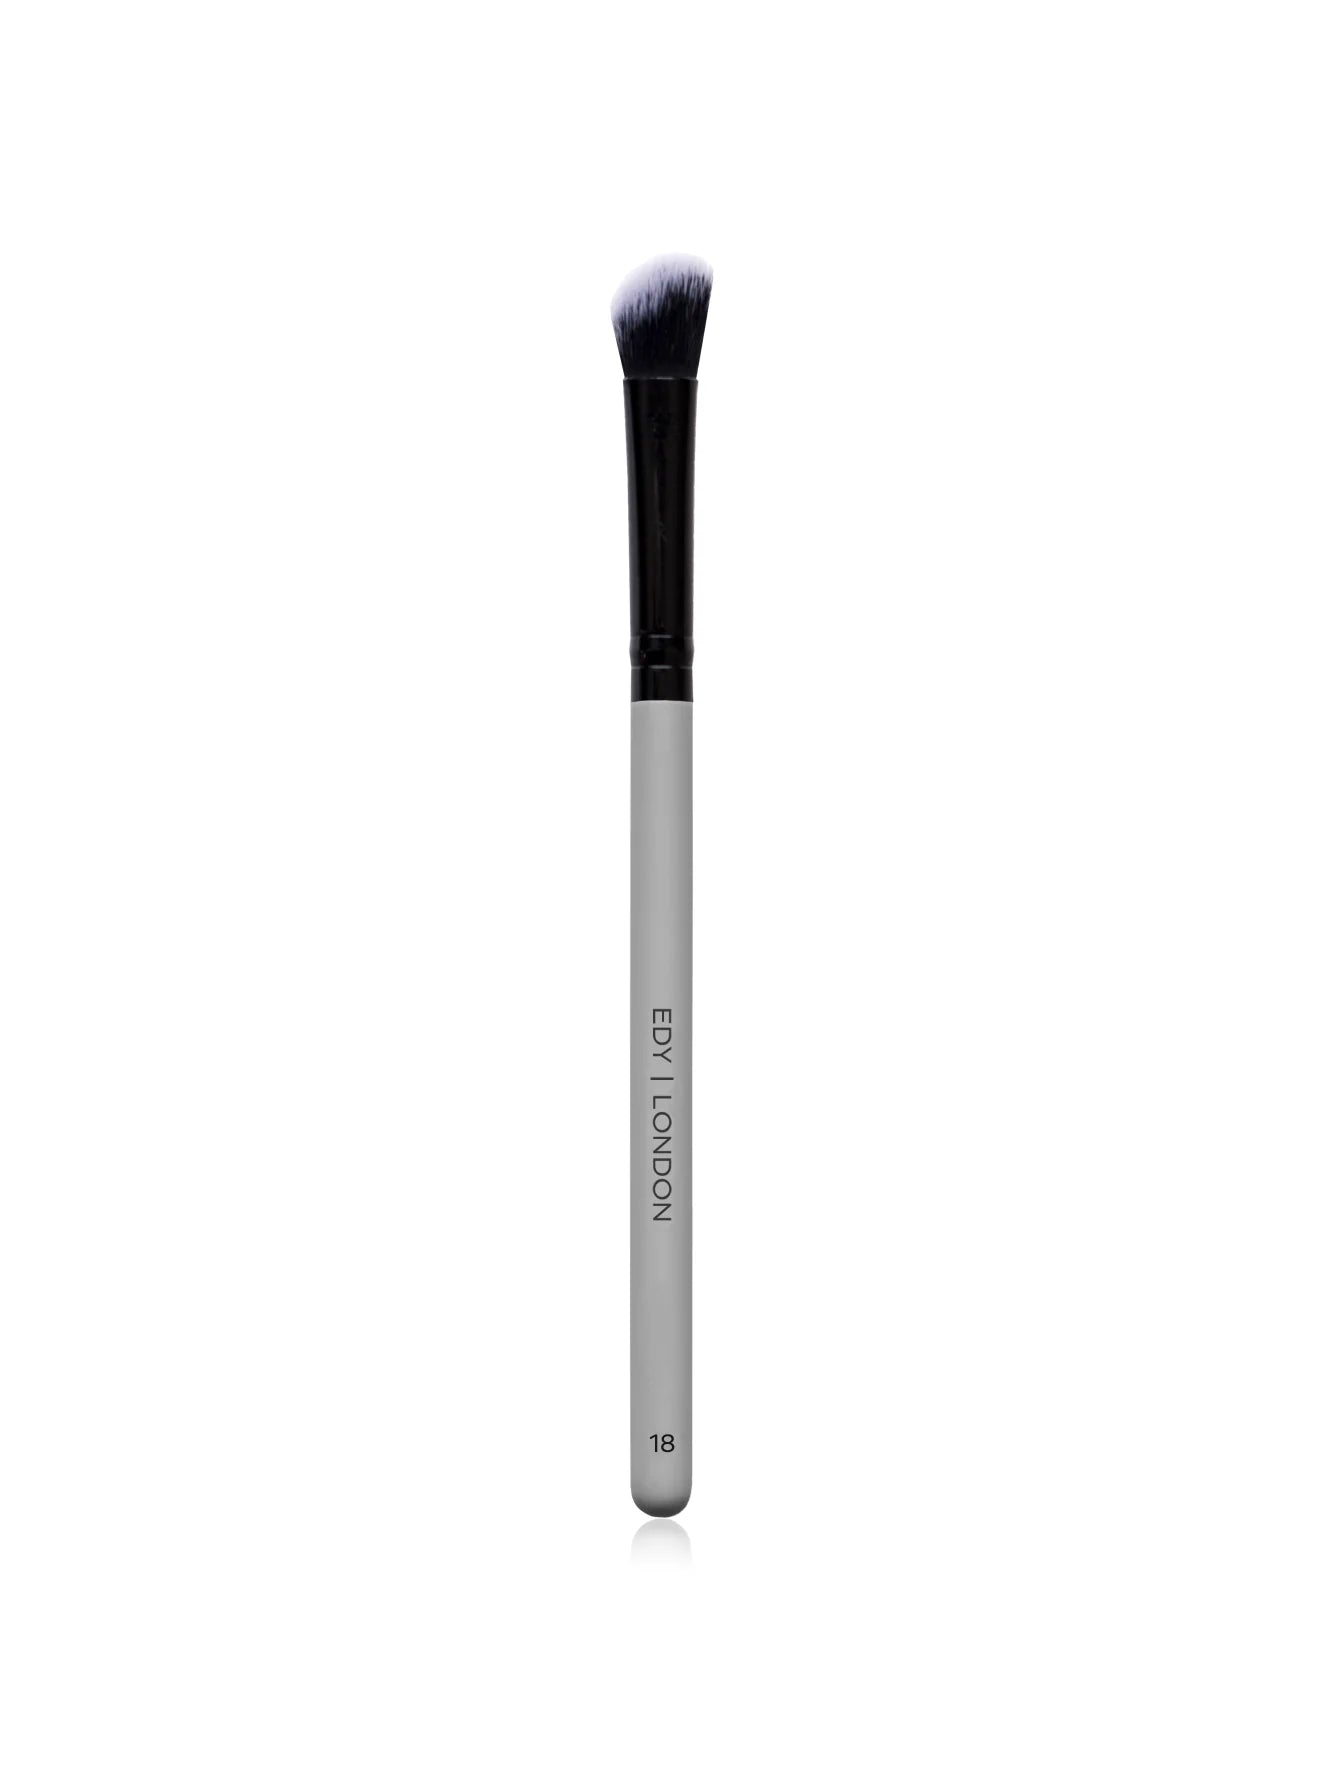 Medium Angled Blender Brush 18 Make-up Brush EDY LONDON Cool Grey   - EDY LONDON PRODUCTS UK - The Best Makeup Brushes - shop.edy.london